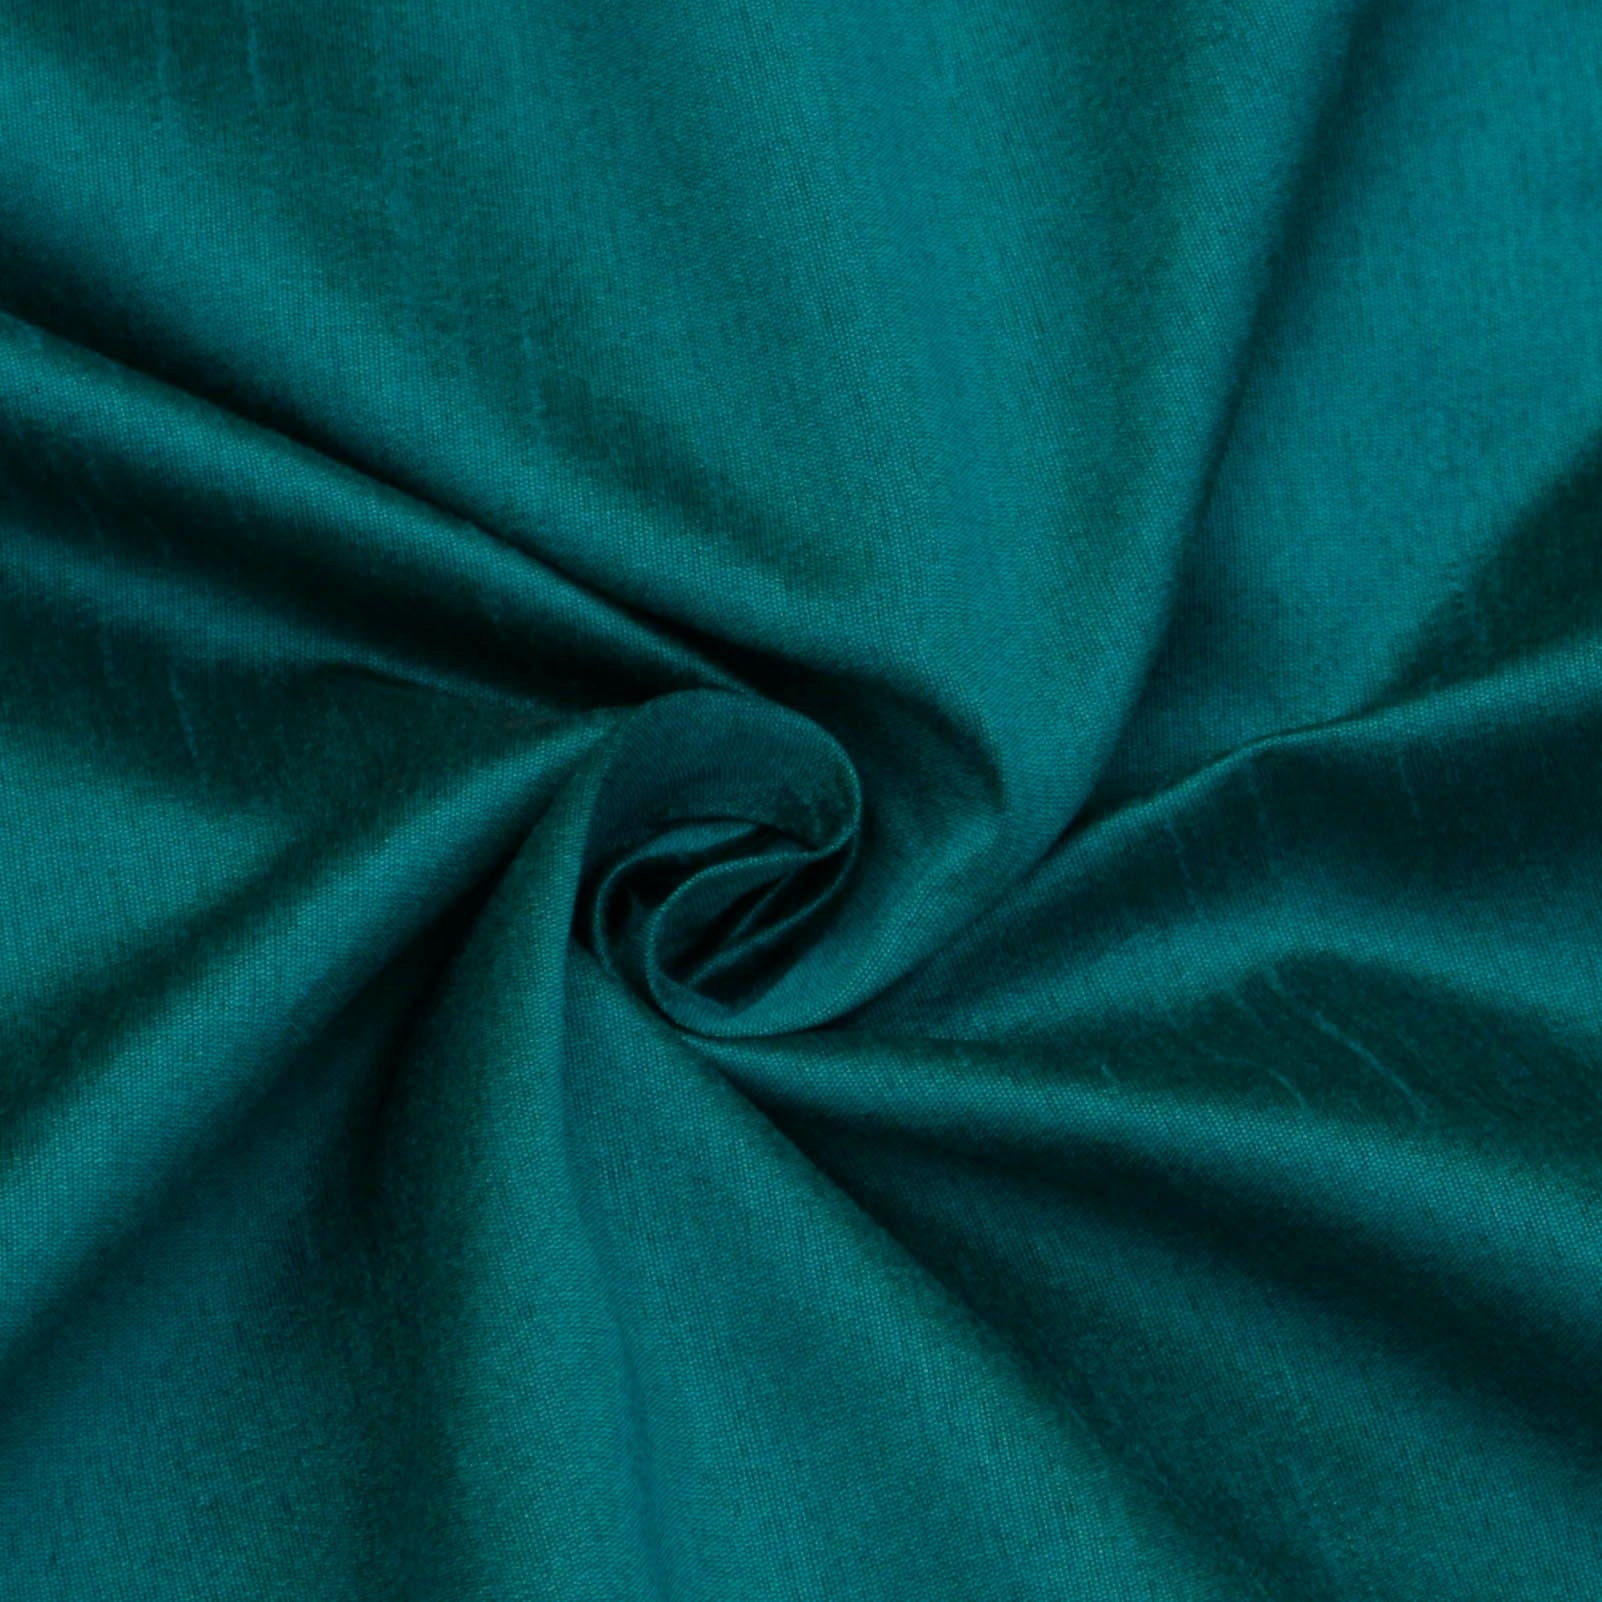 Rhinestone Studded Satin Gray Glamourous Drapery Fabric Home Decor Fancy  Apparel Faux Silk Fabric CV200